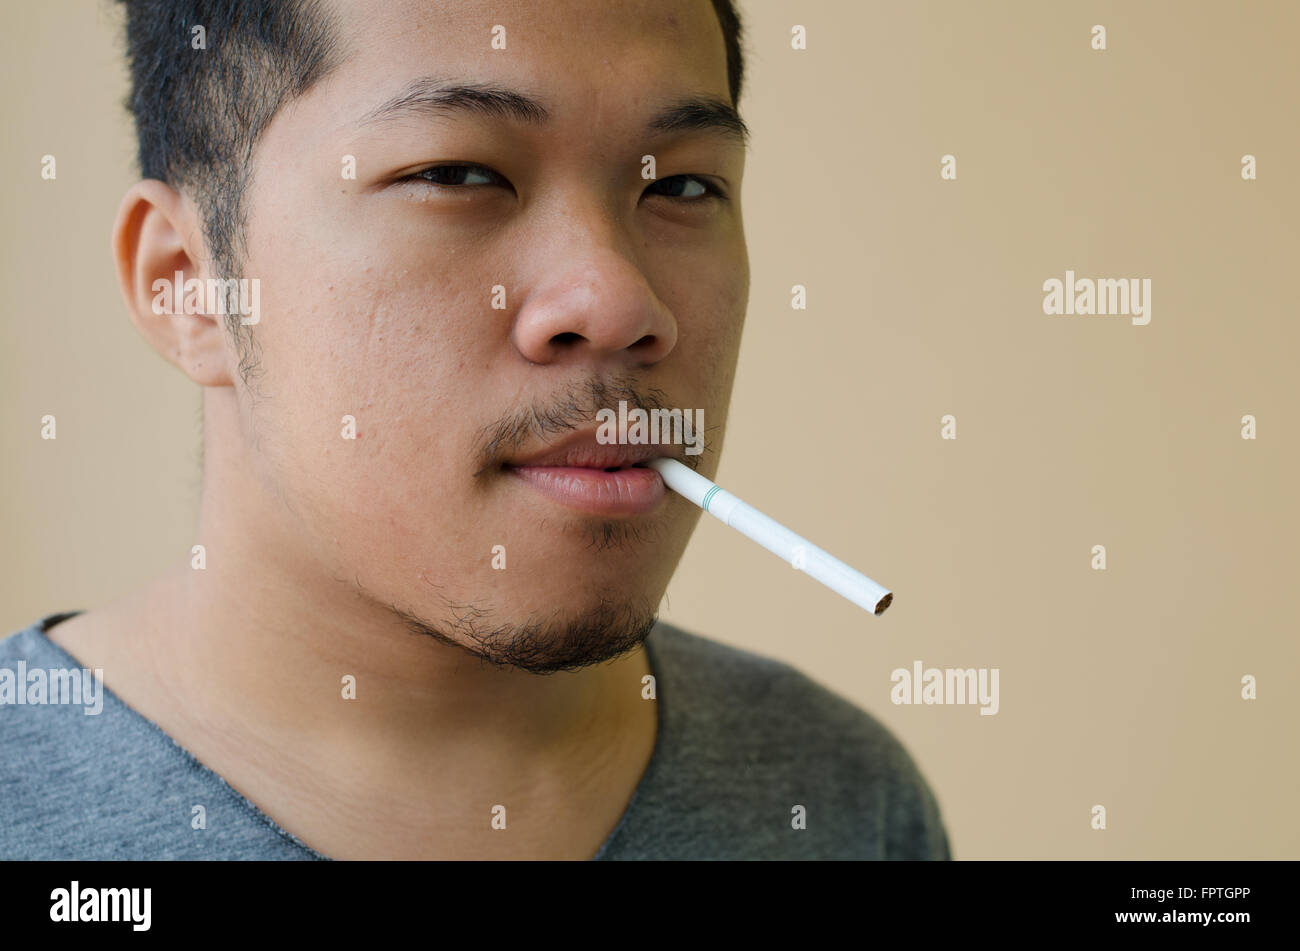 young man smoking a cigarette Stock Photo